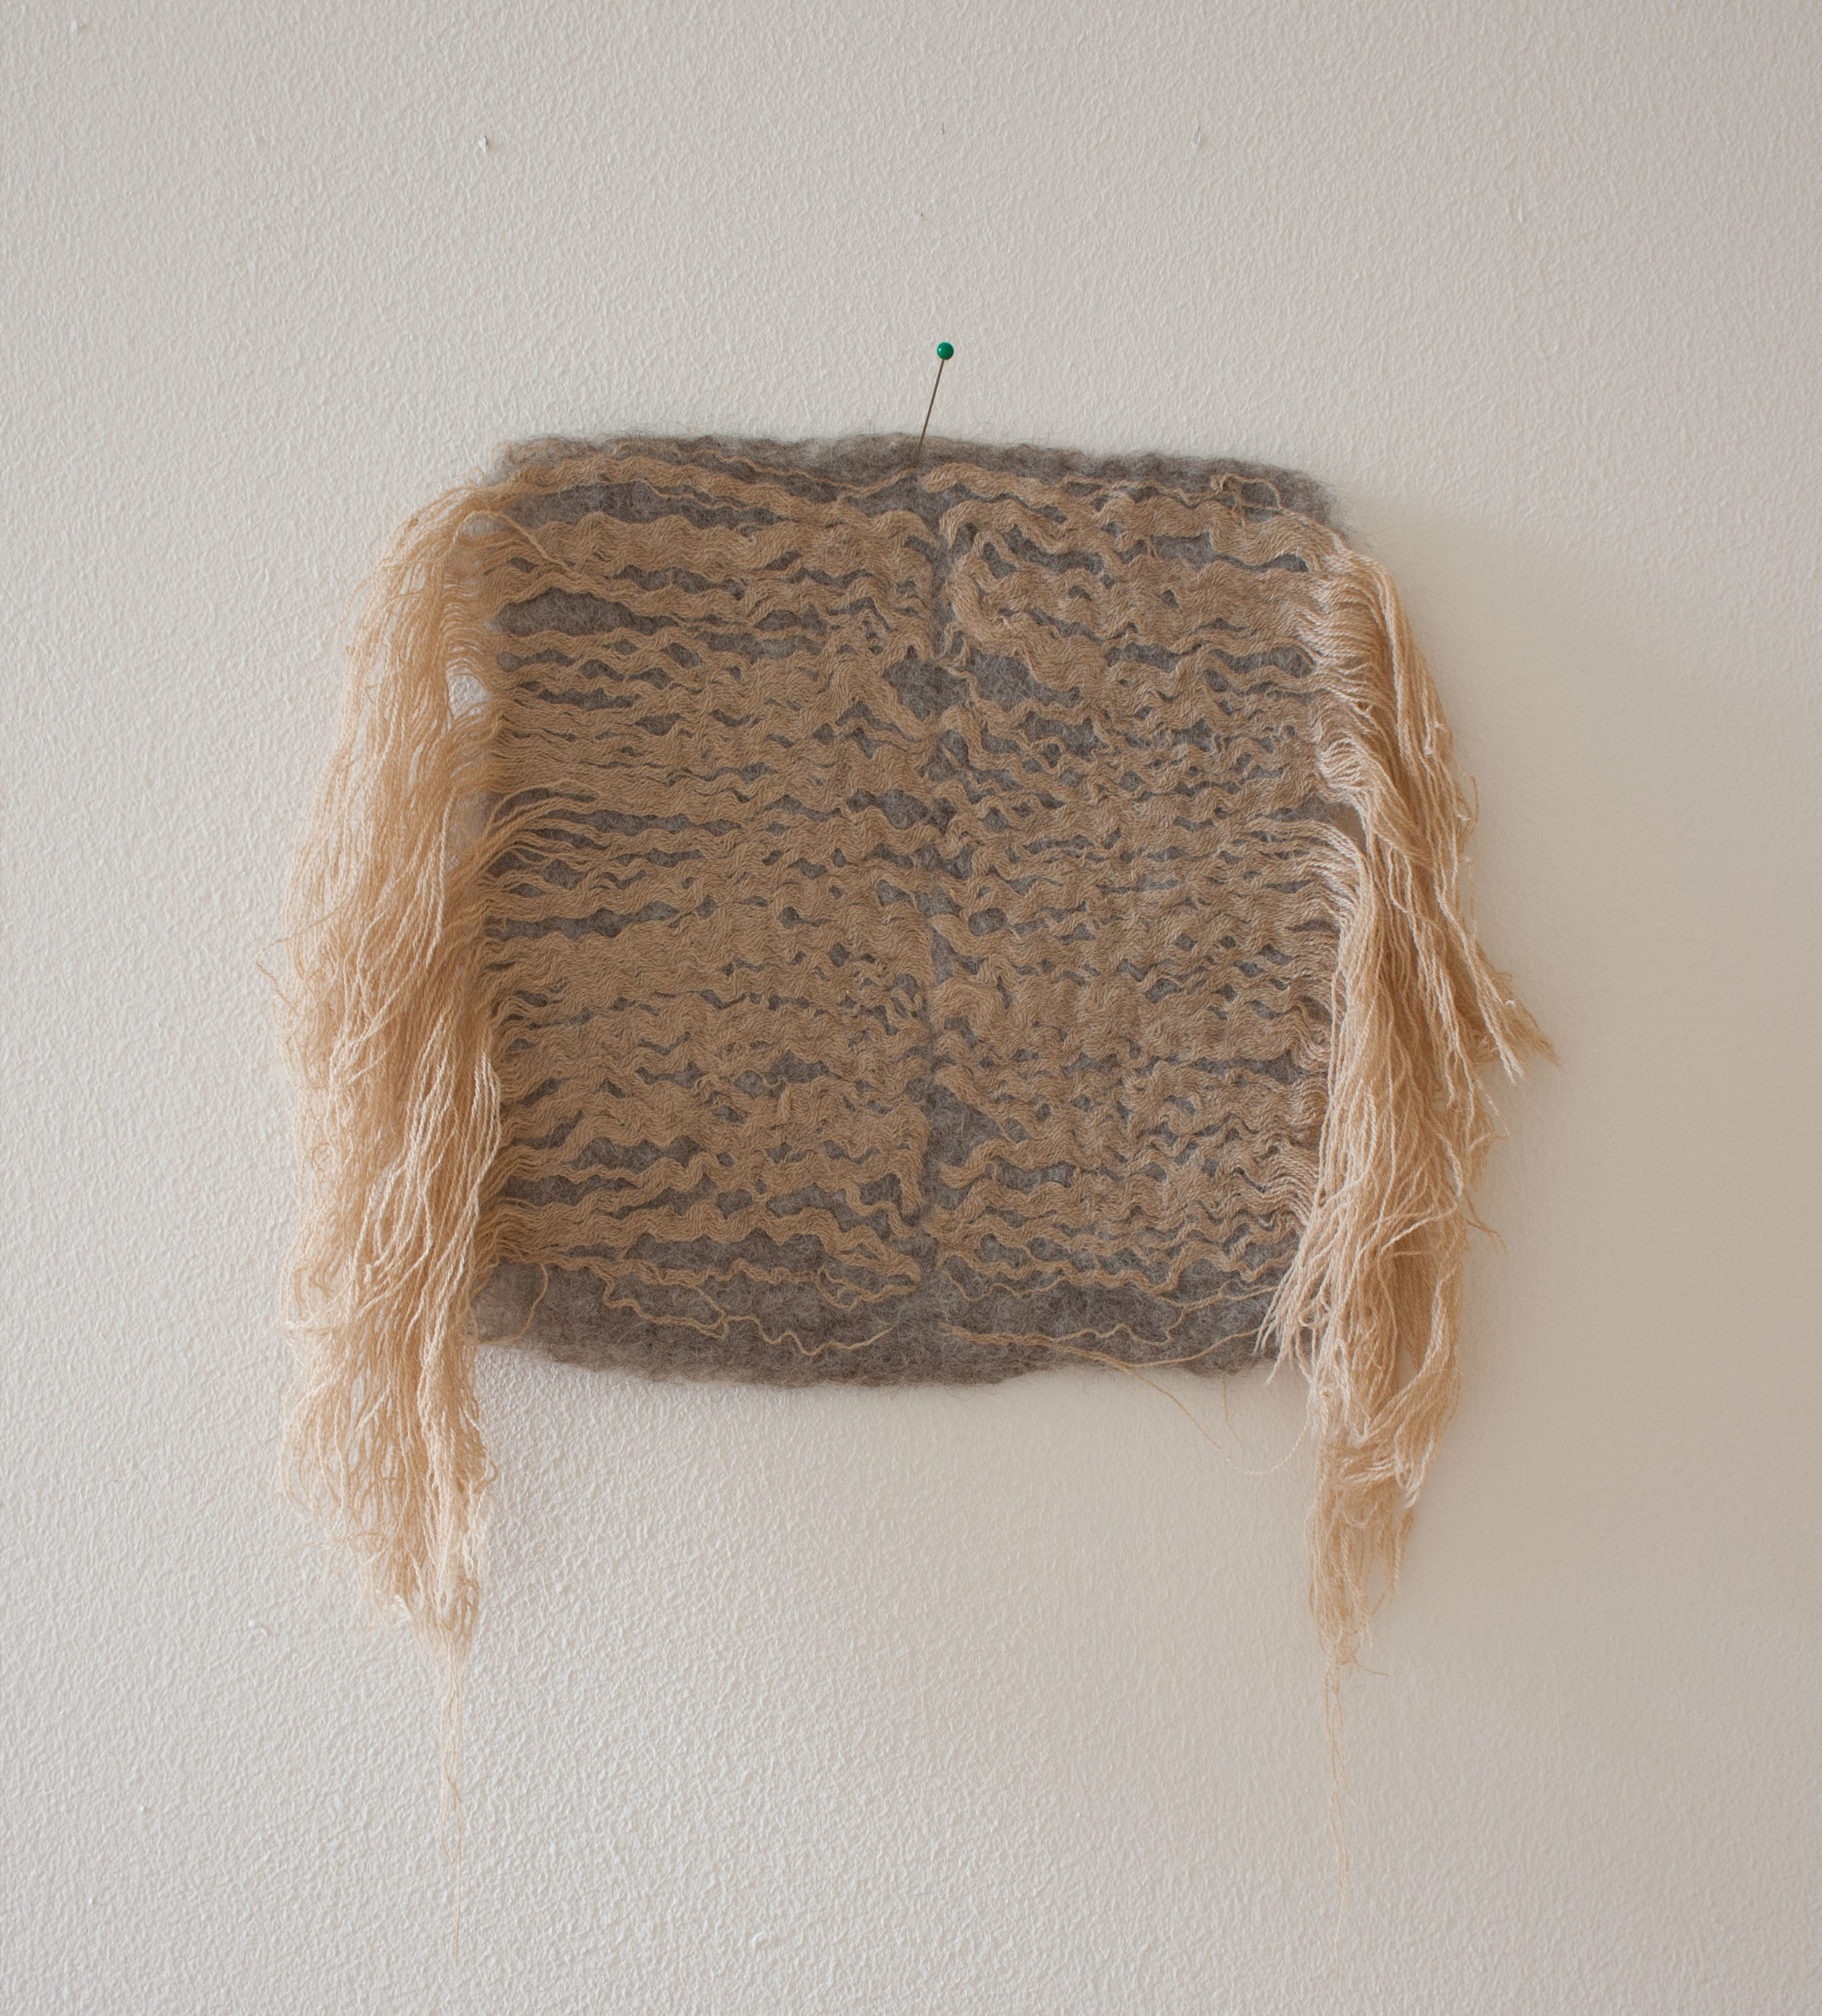  Untitled, 2015  Hand-felted wool, dyed wool yarn 